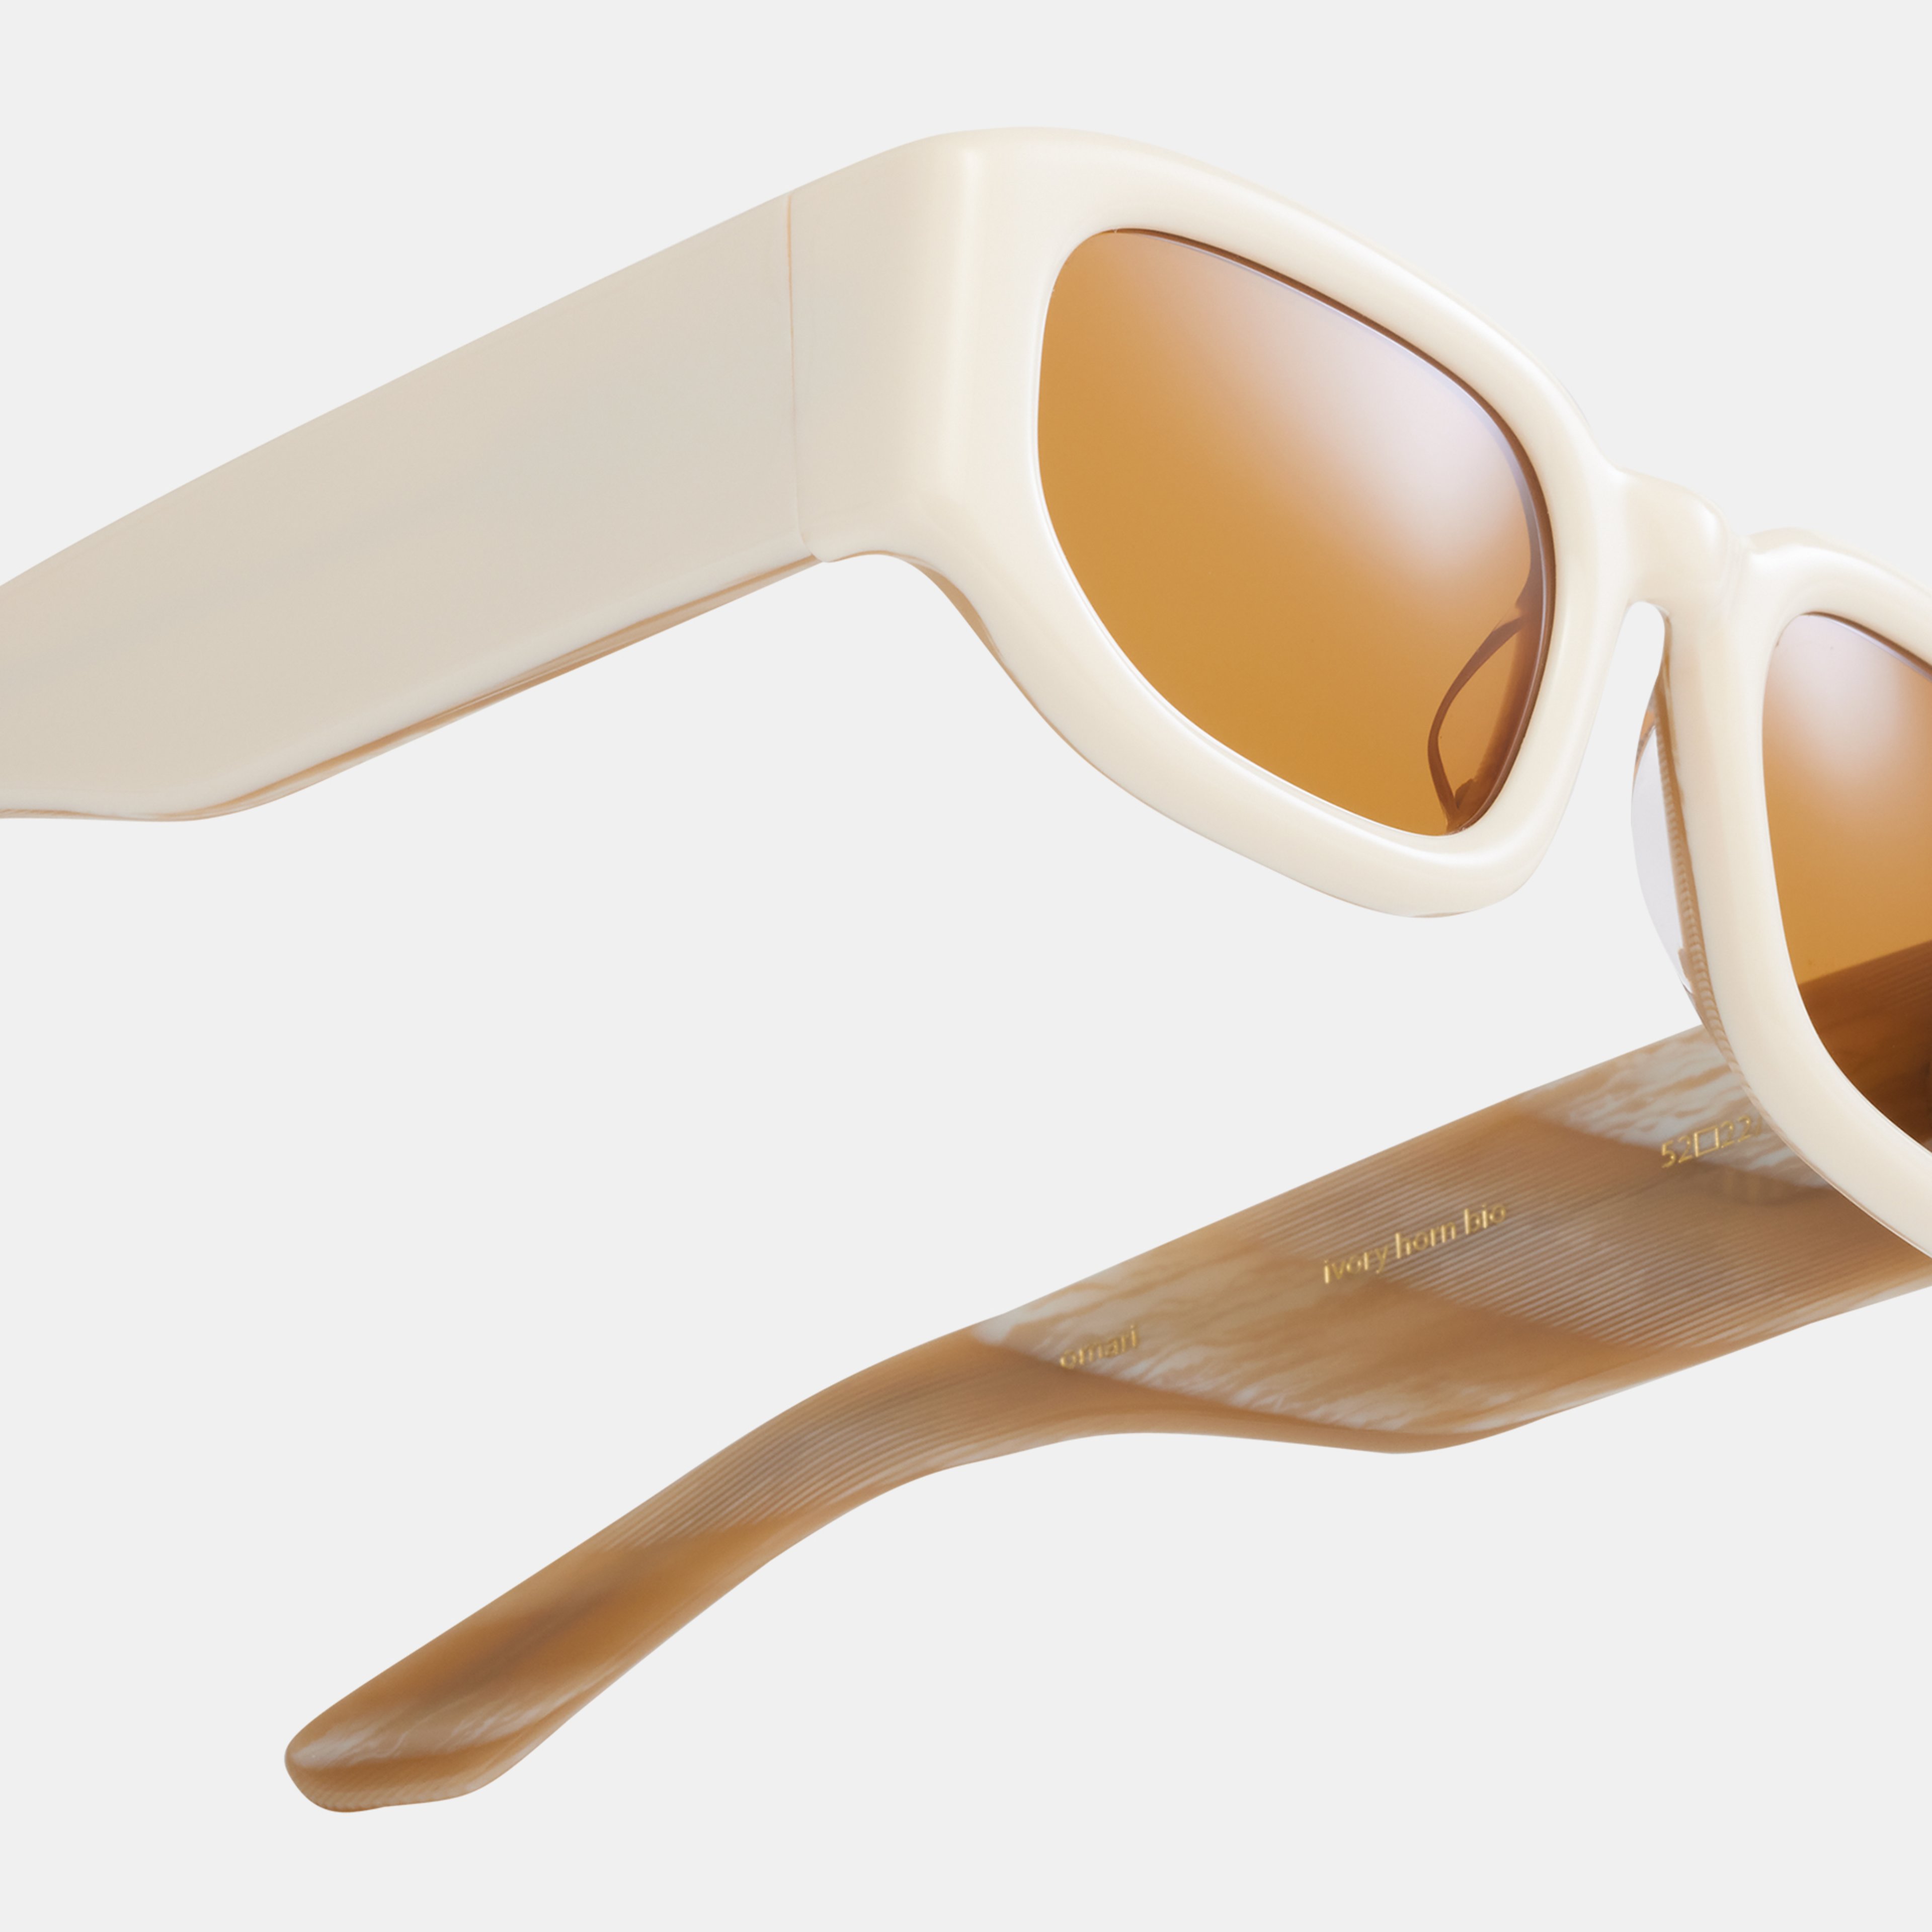 Ace & Tate Sunglasses | rectangle Bio acetate in White